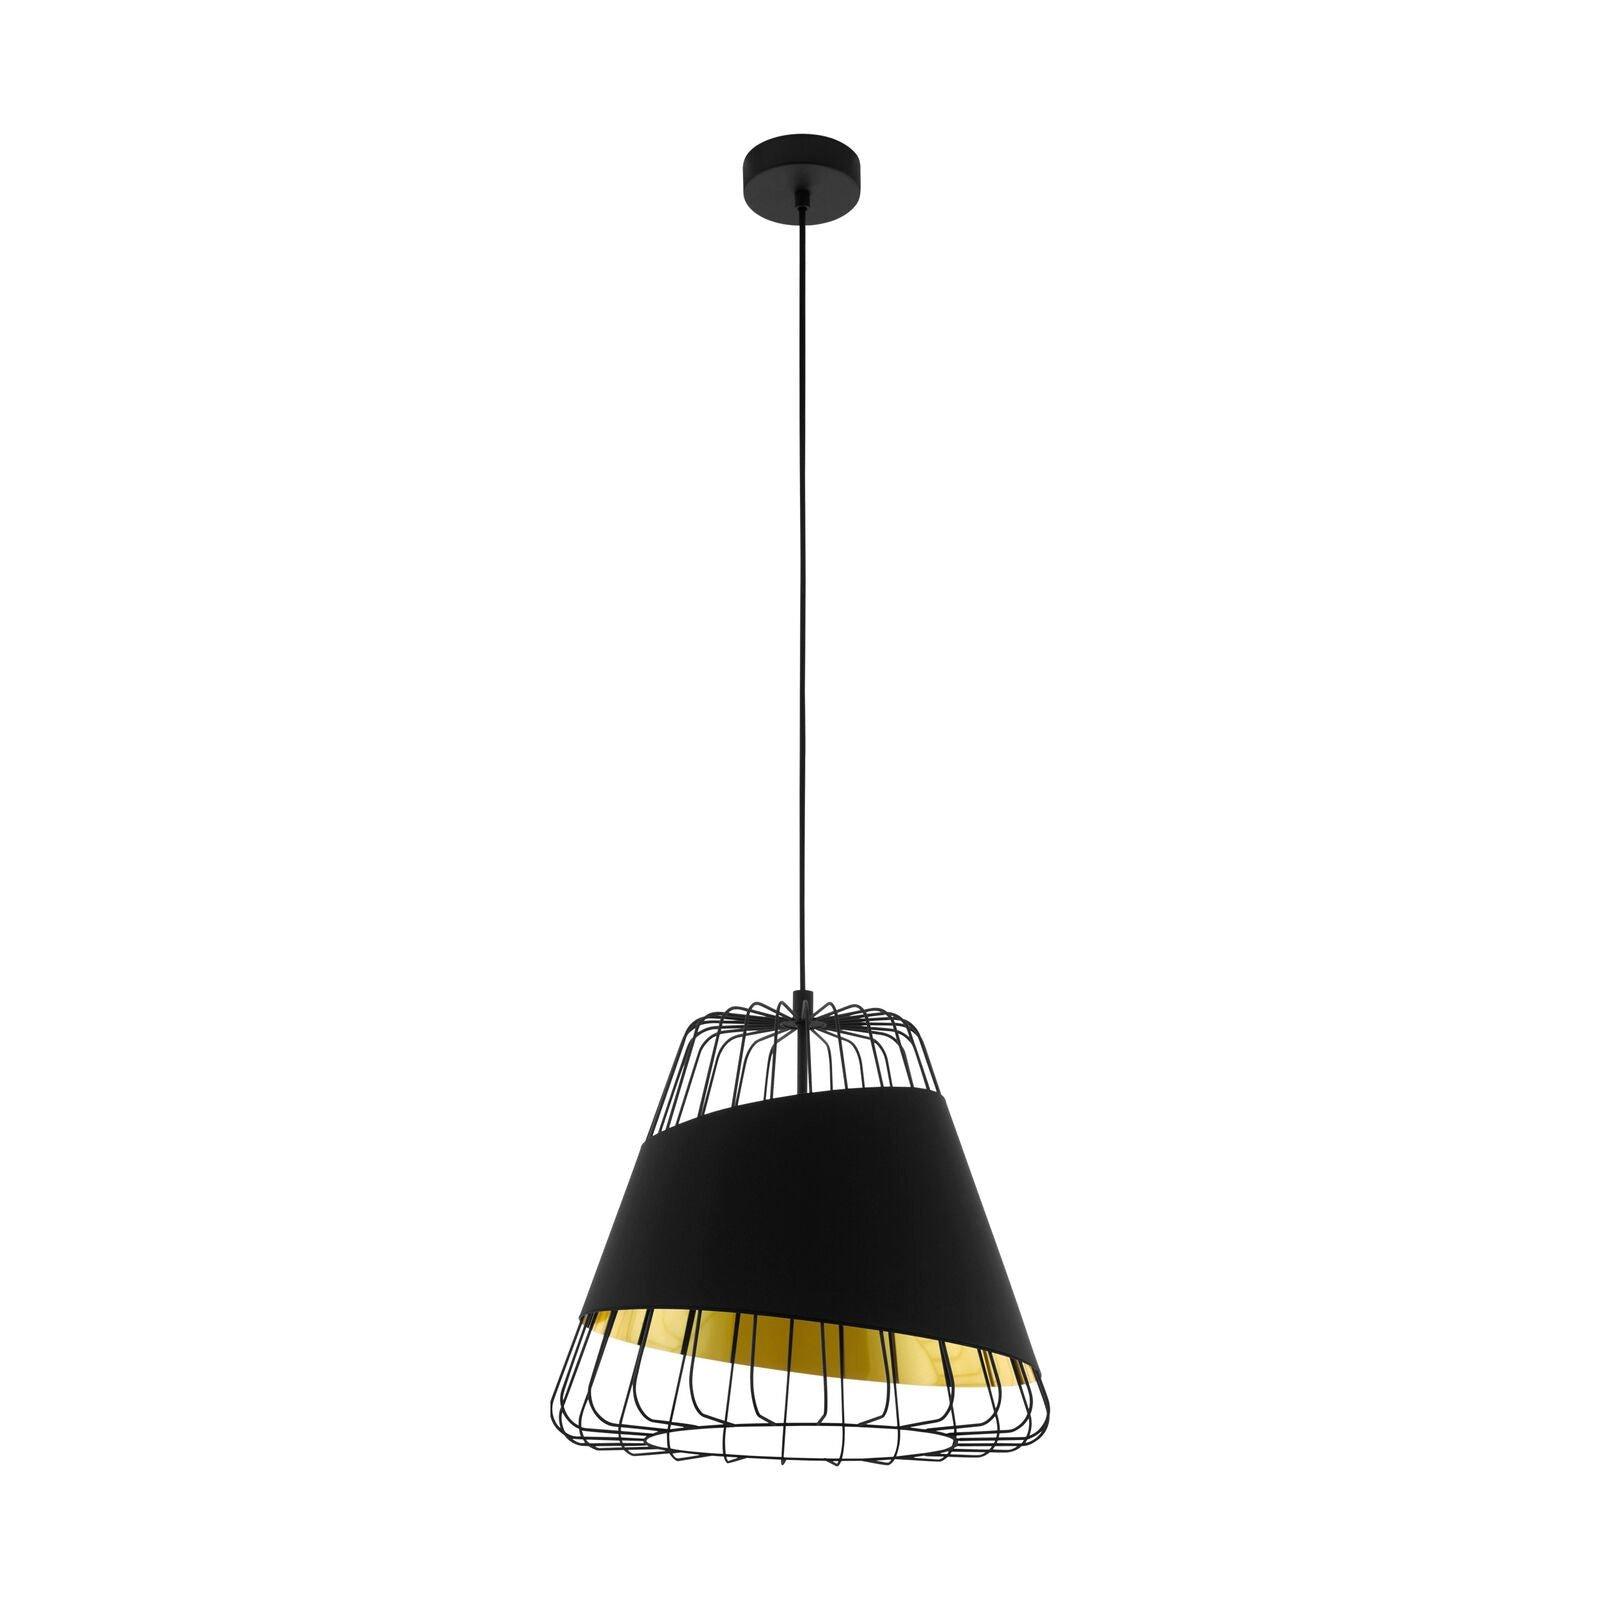 Hanging Ceiling Pendant Light Black & Gold 1 x 60W E27 Hallway Feature Lamp